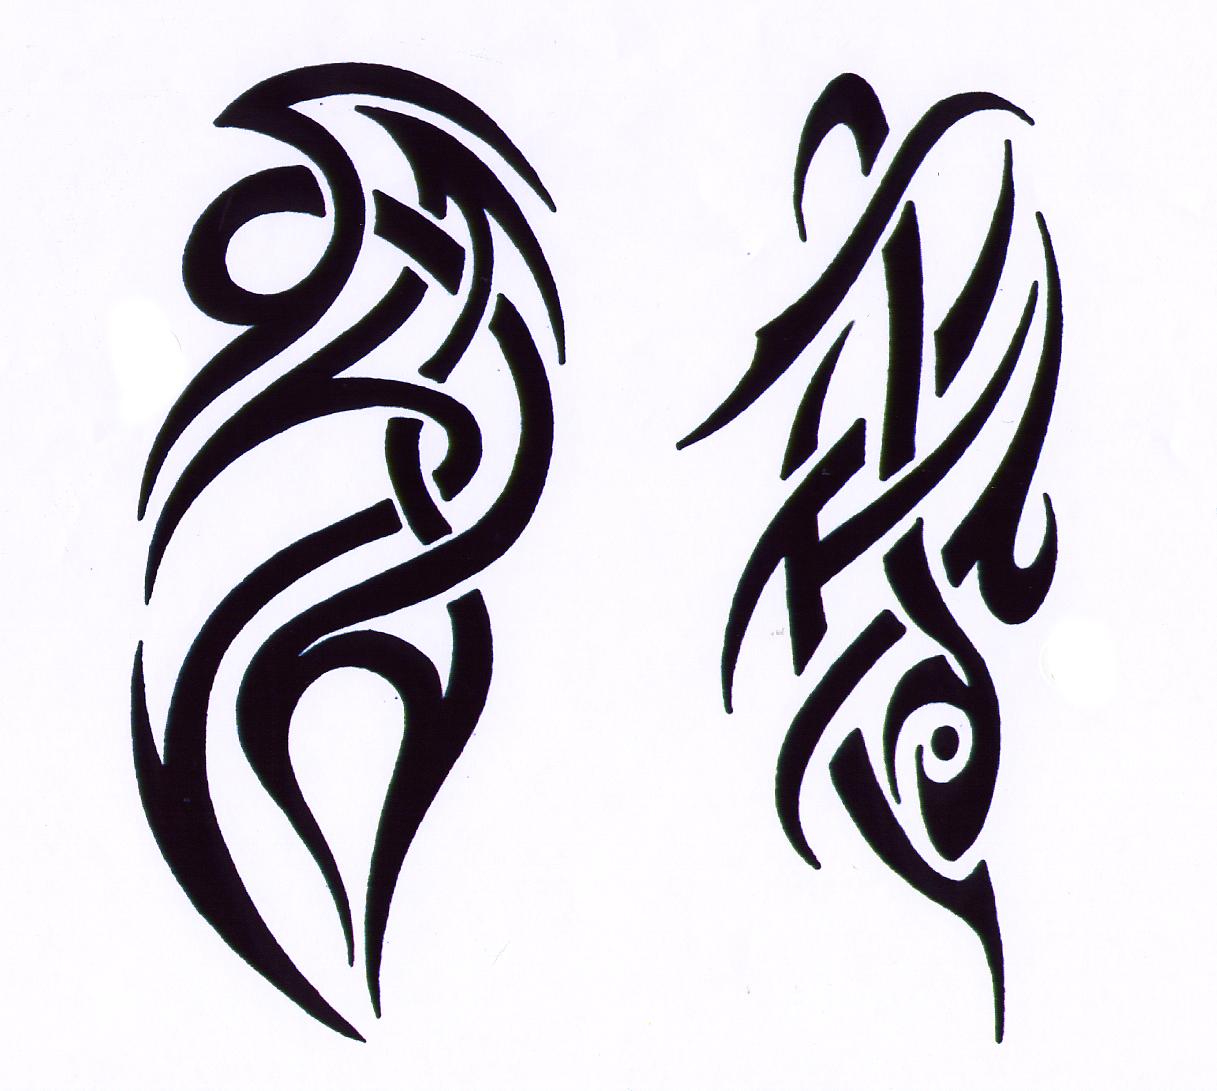 tribal musical tattoos